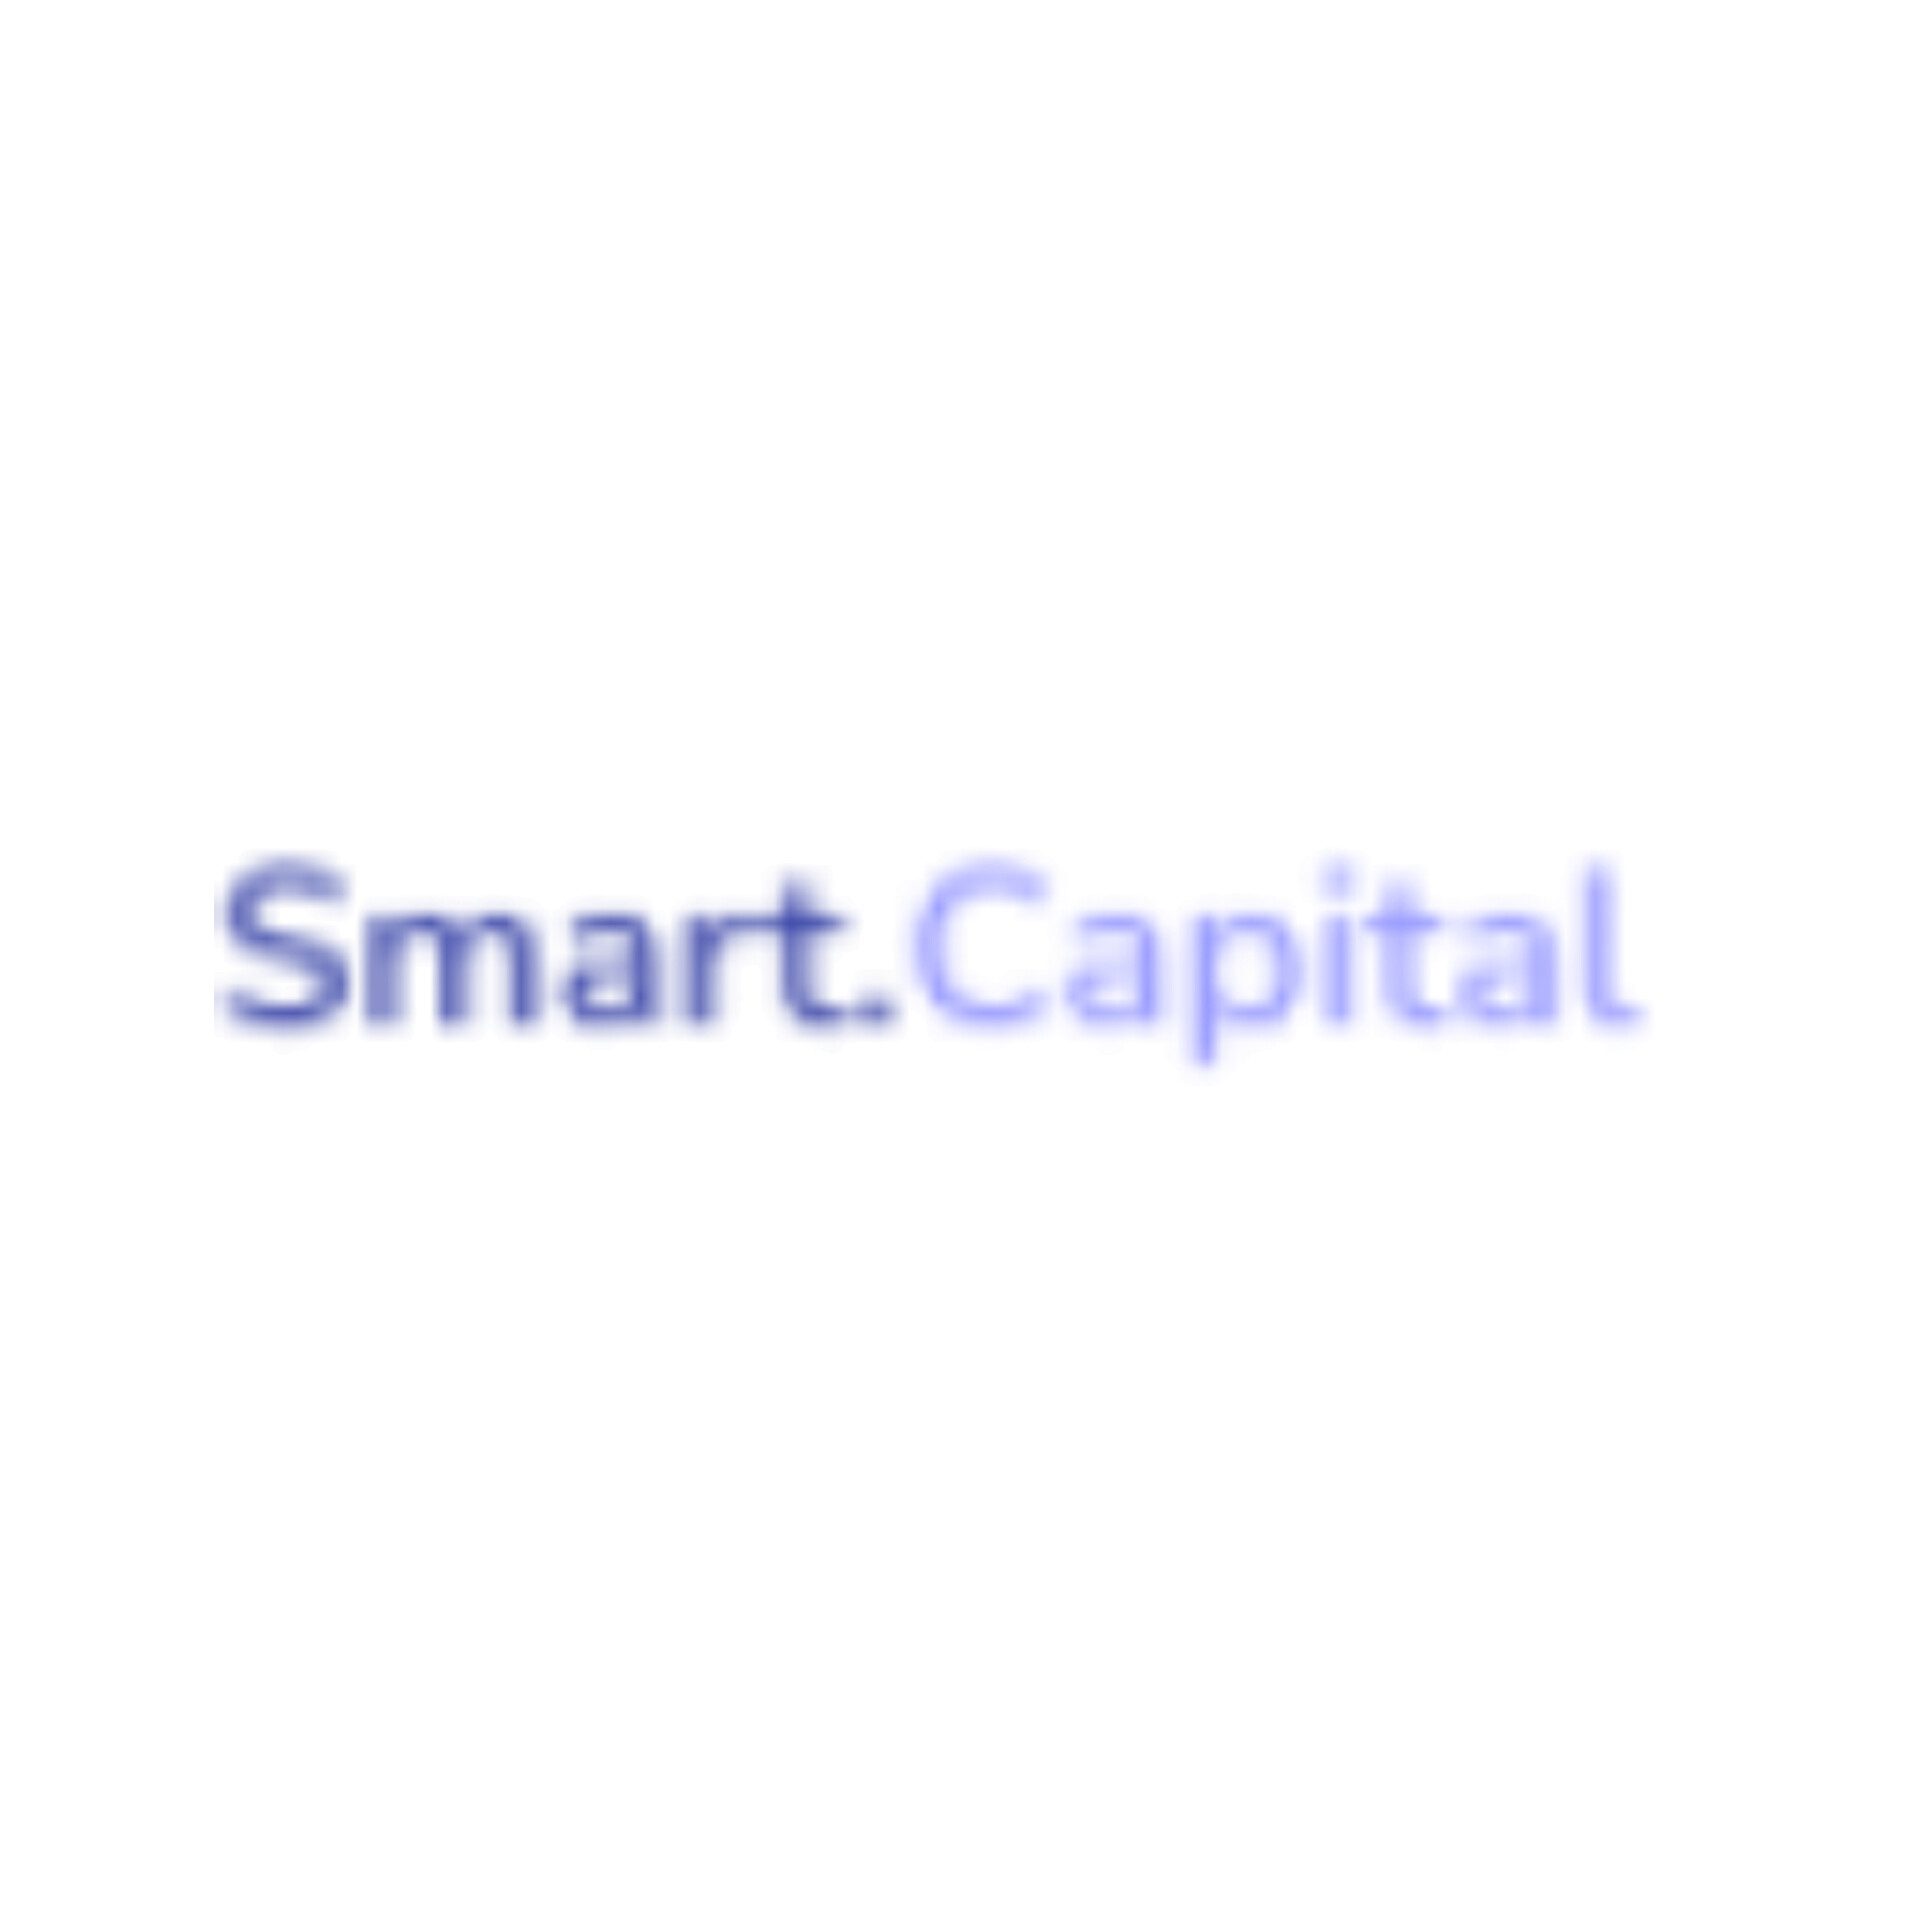 Smart Capital broker trade